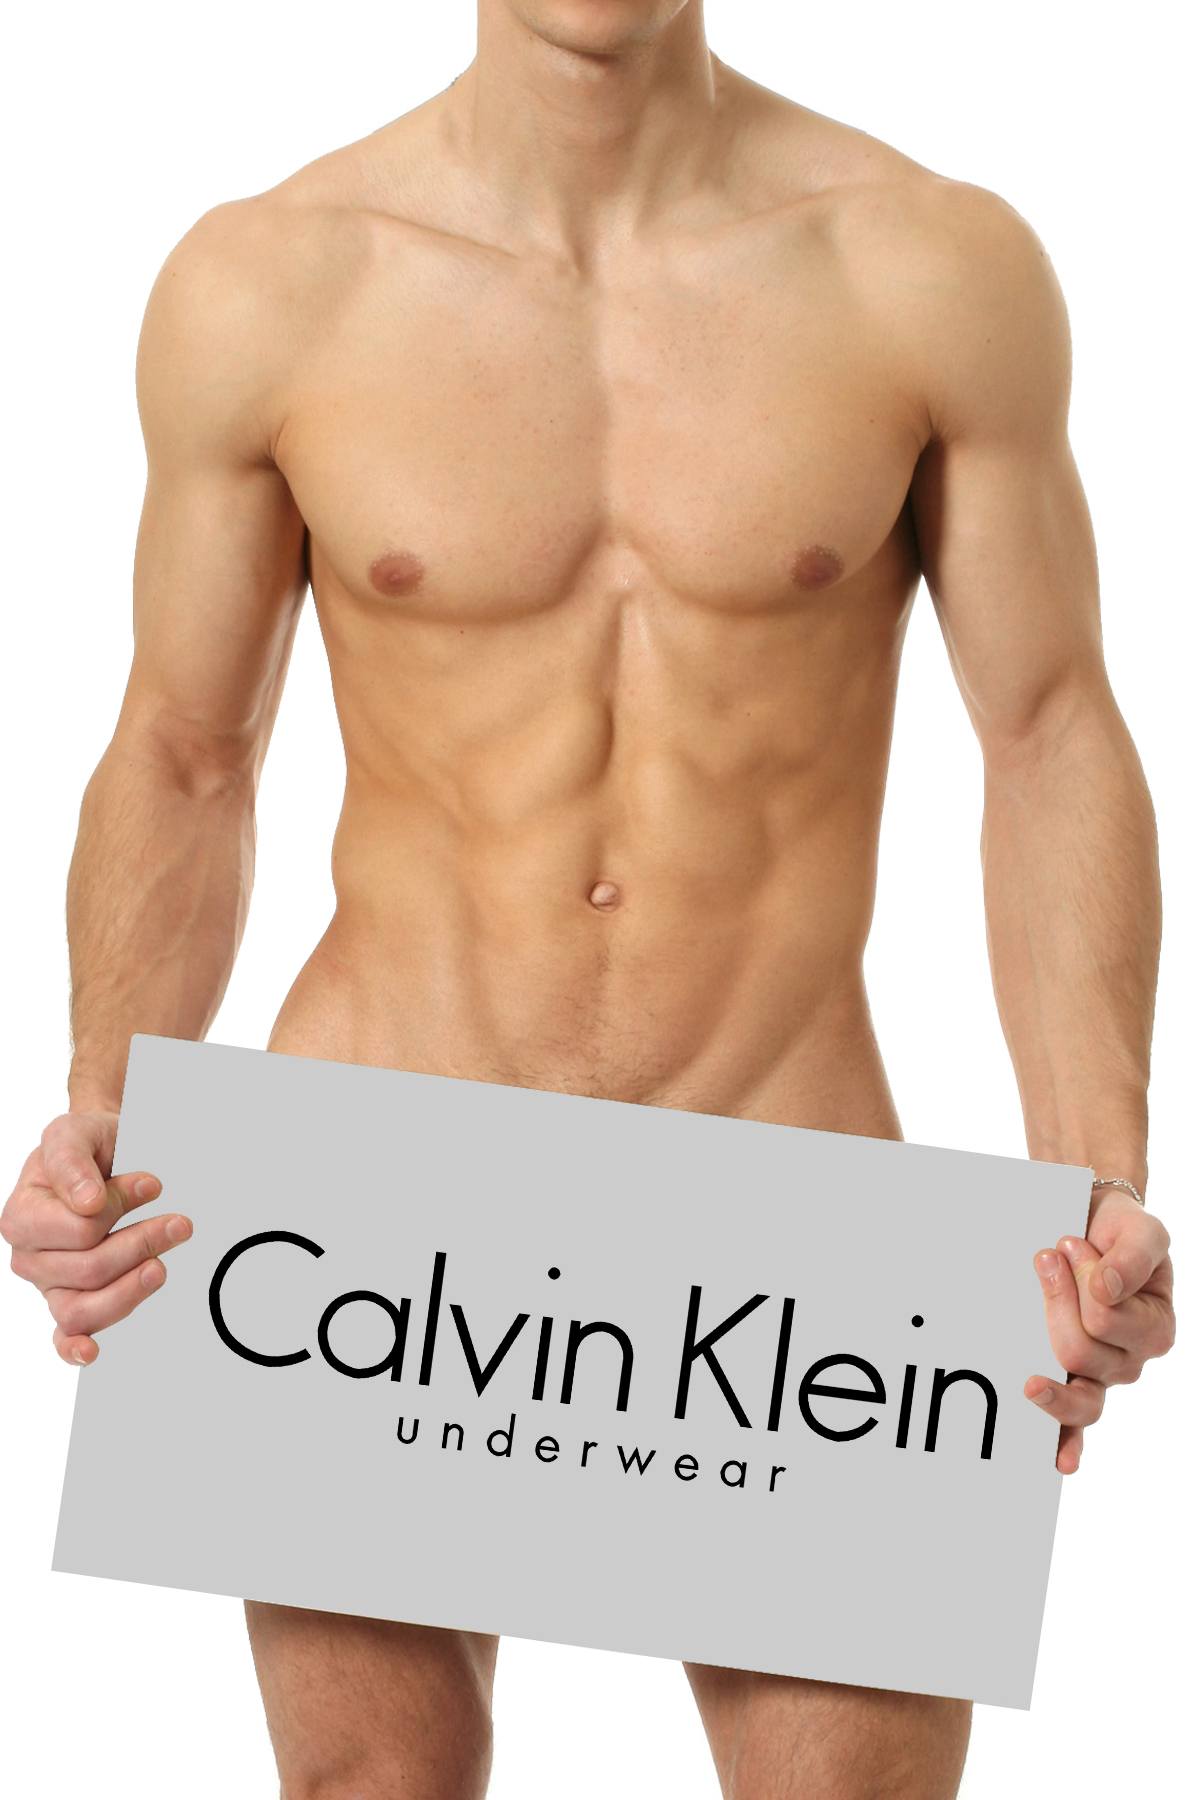 Calvin Klein Mystery Item